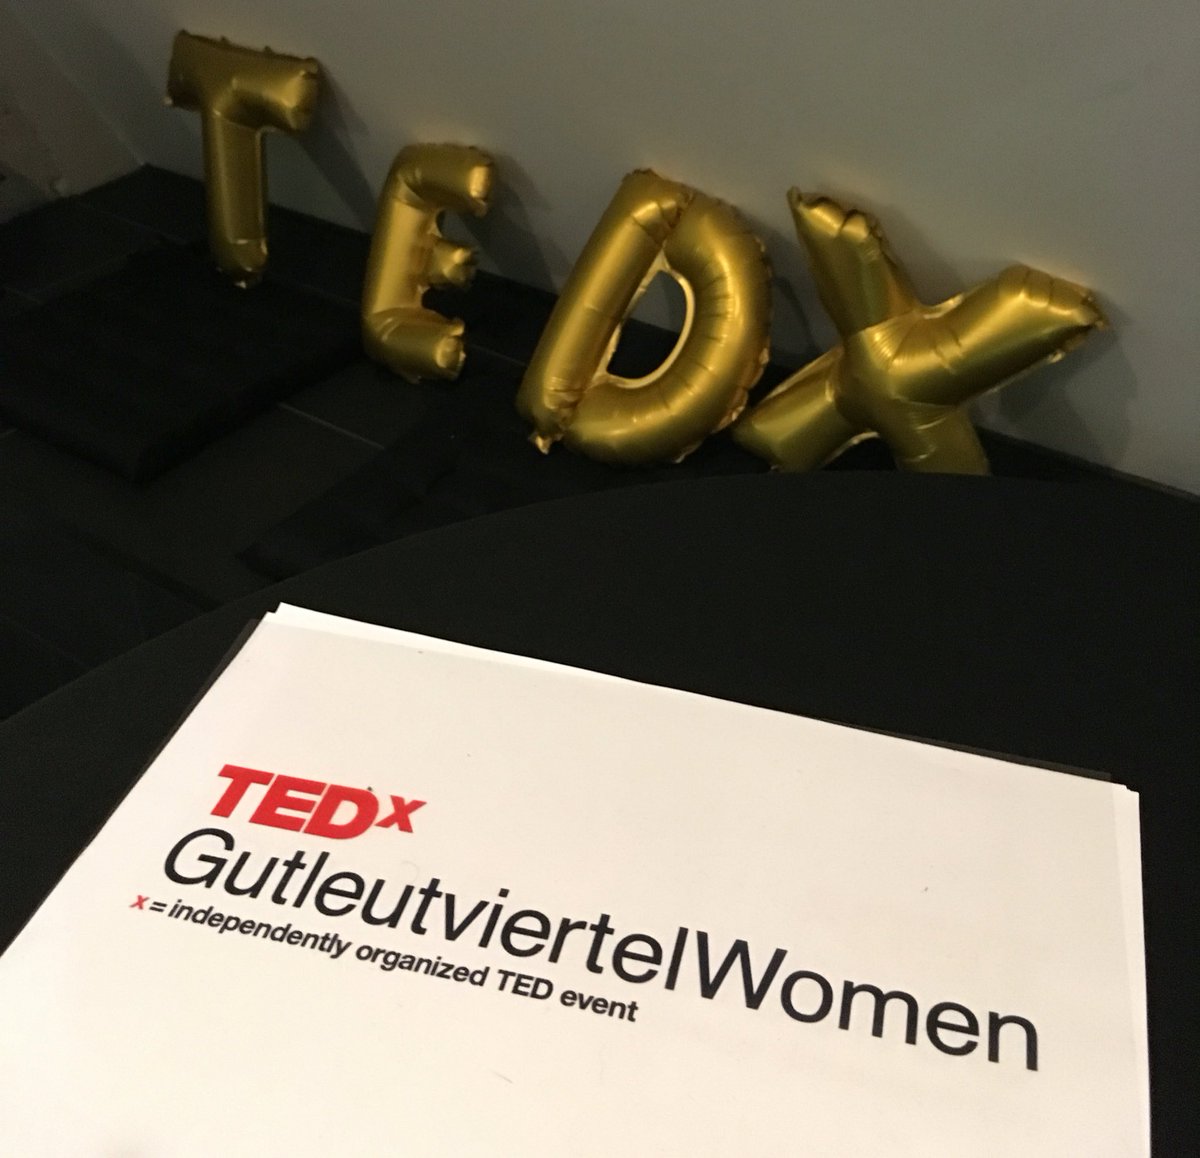 Inspiring? Yes indeed. #TEDxWomen #Frankfurt